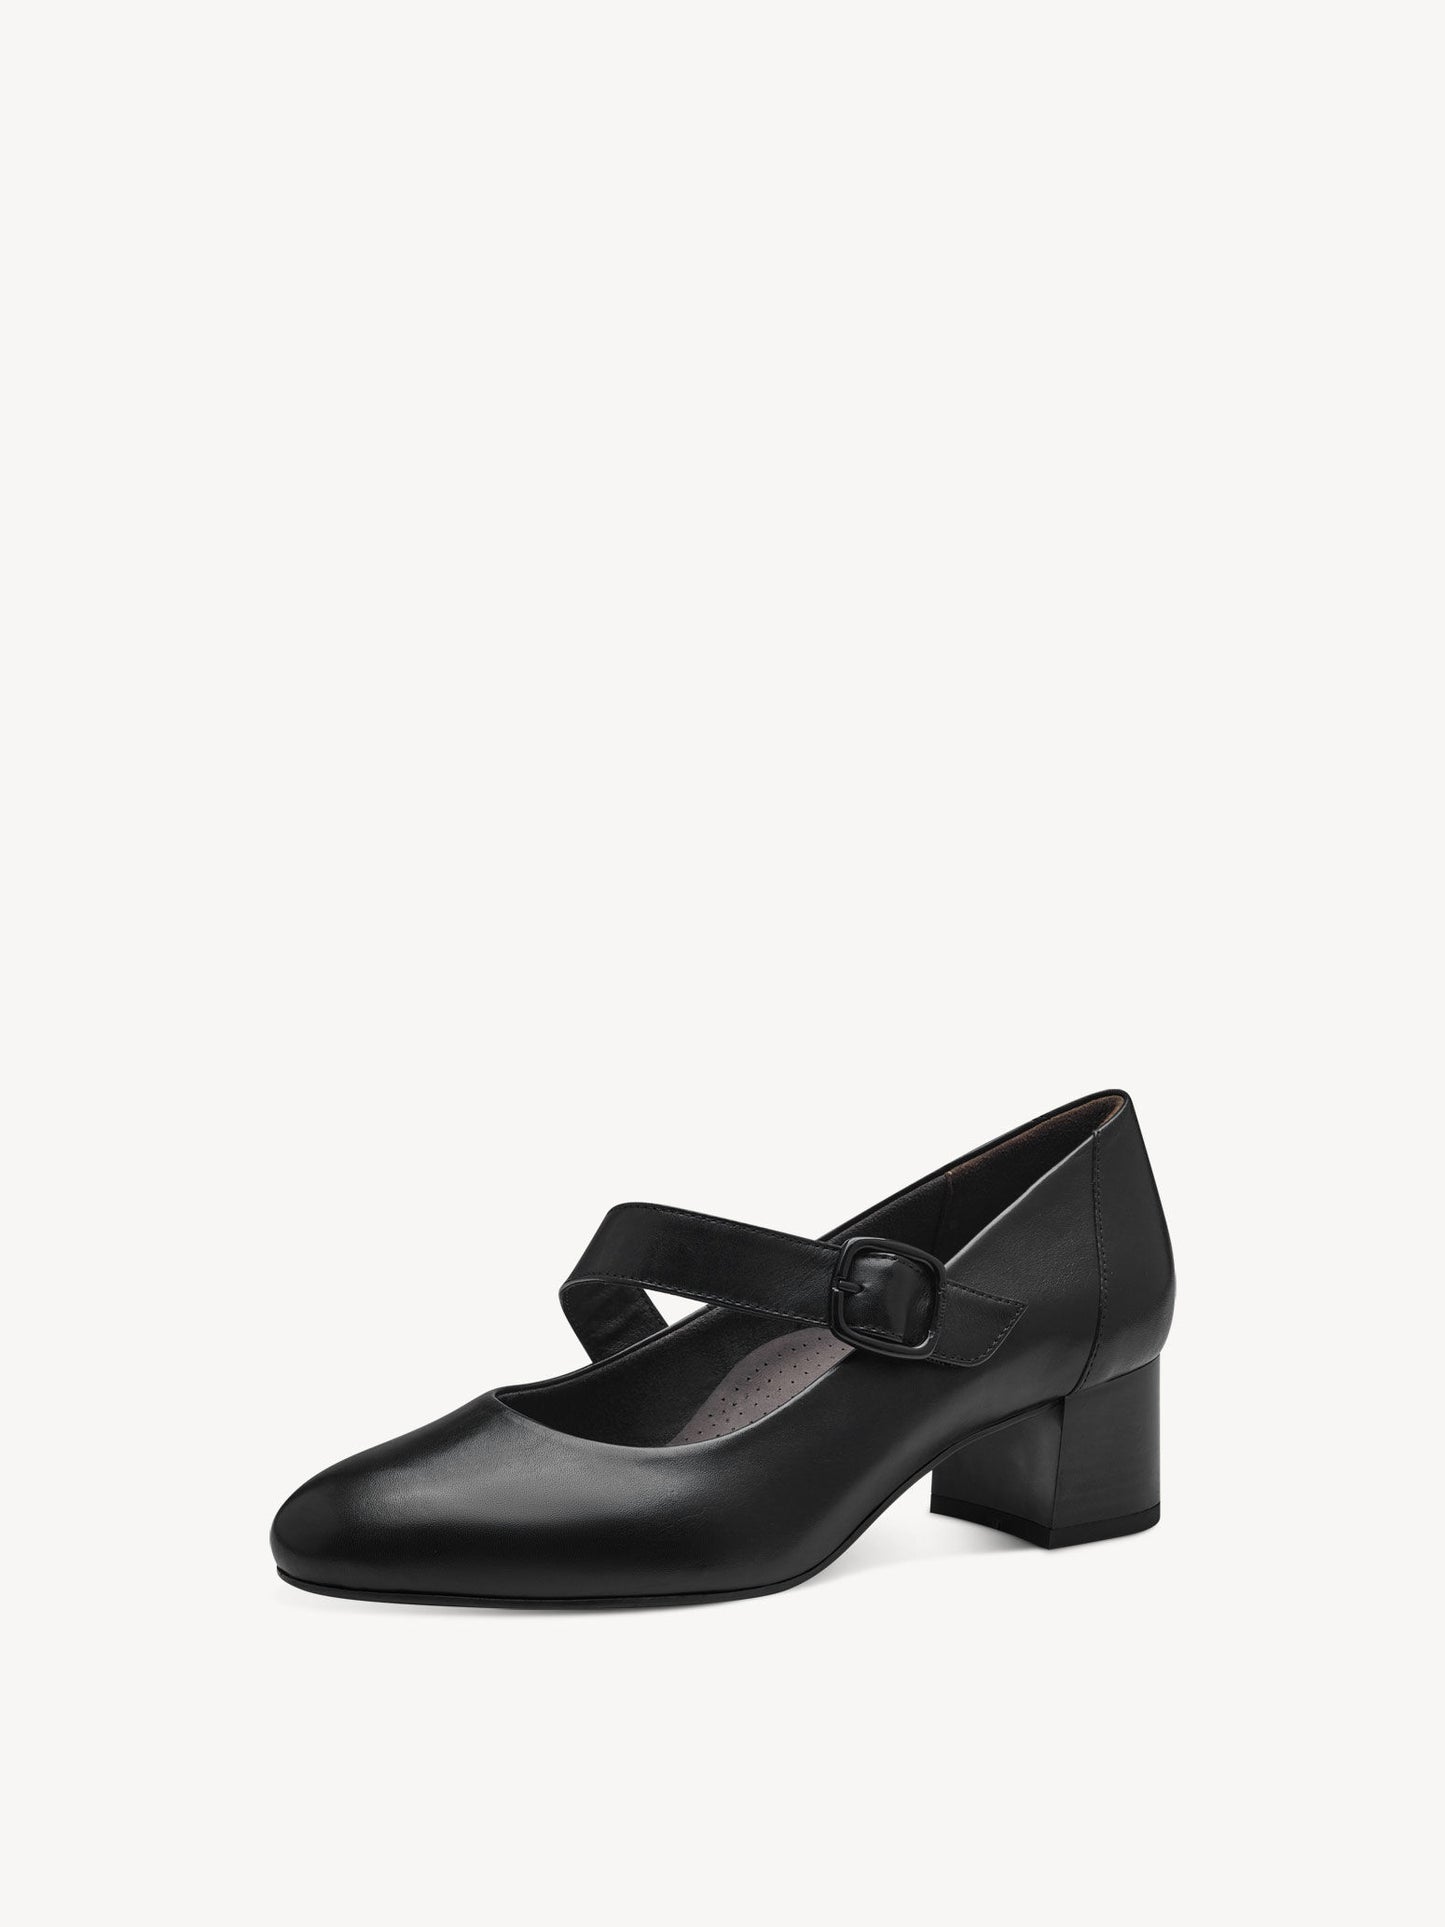 Tamaris Women's 8-84302-42 Leather Pump Shoes Black Nappa Uni